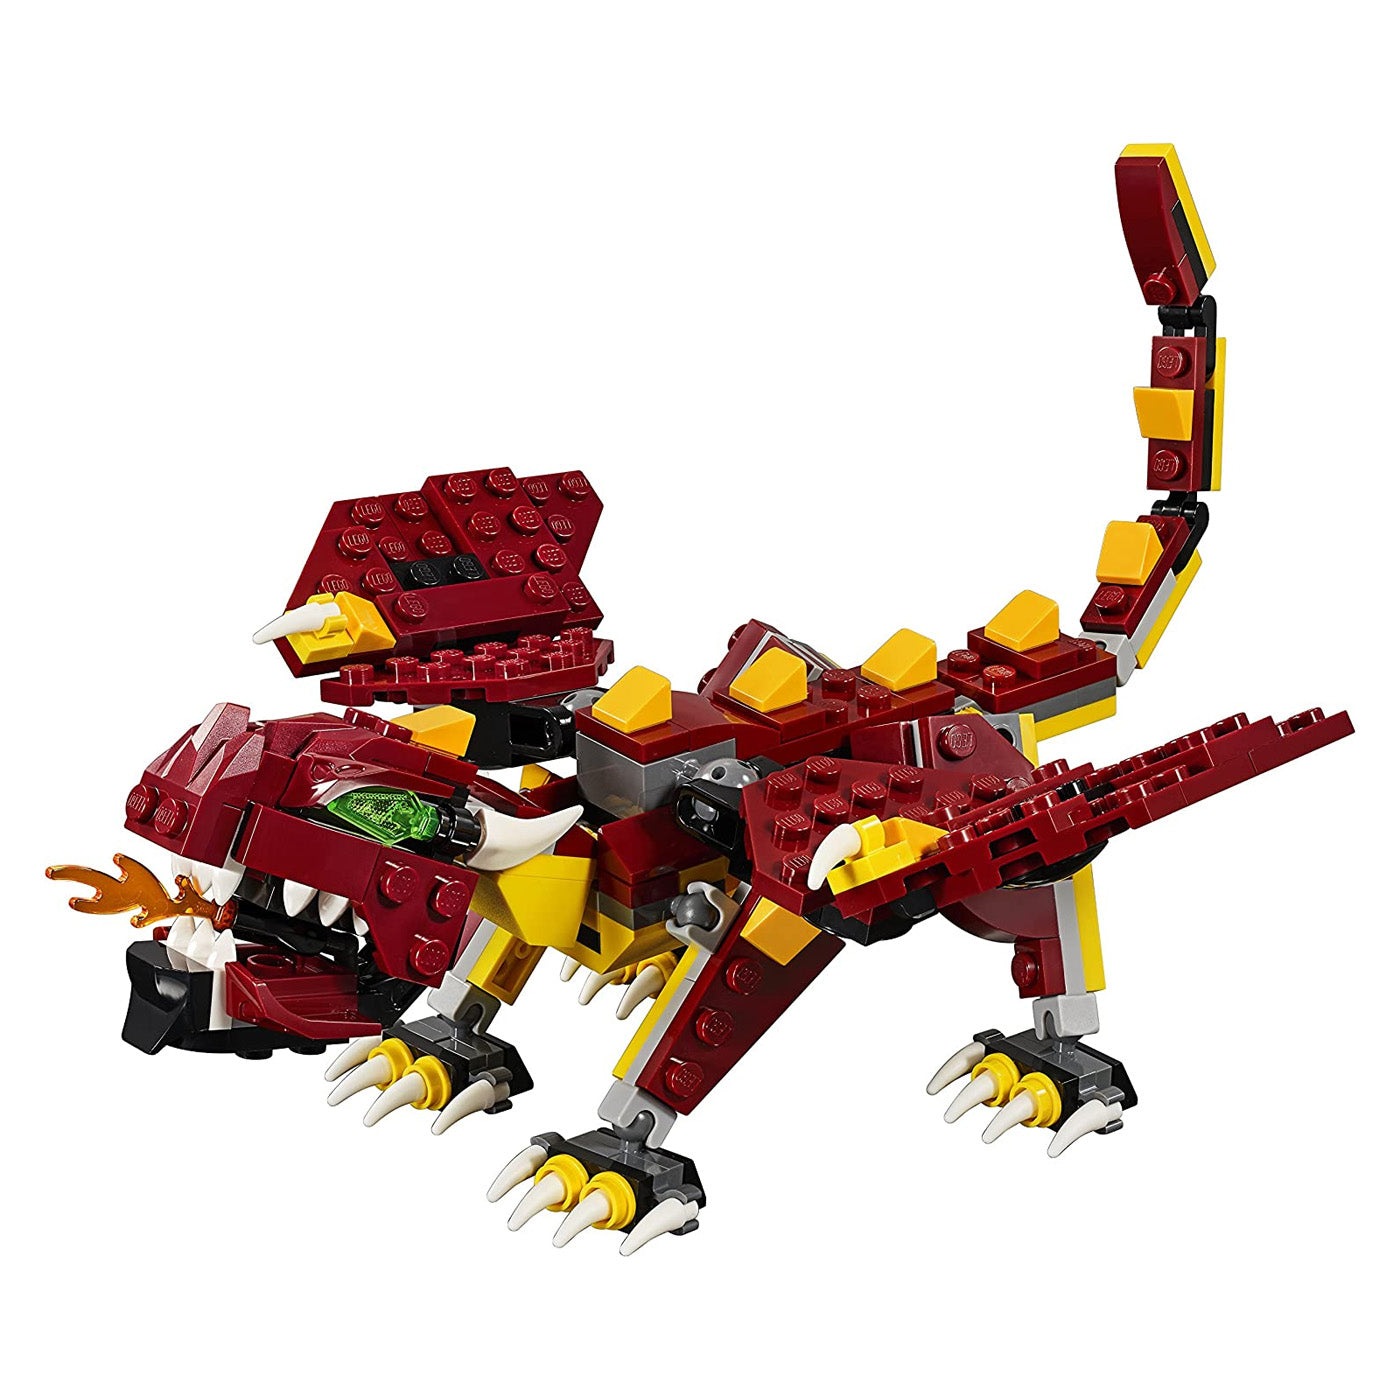 LEGO Creator: Mythical Creatures Set 31073